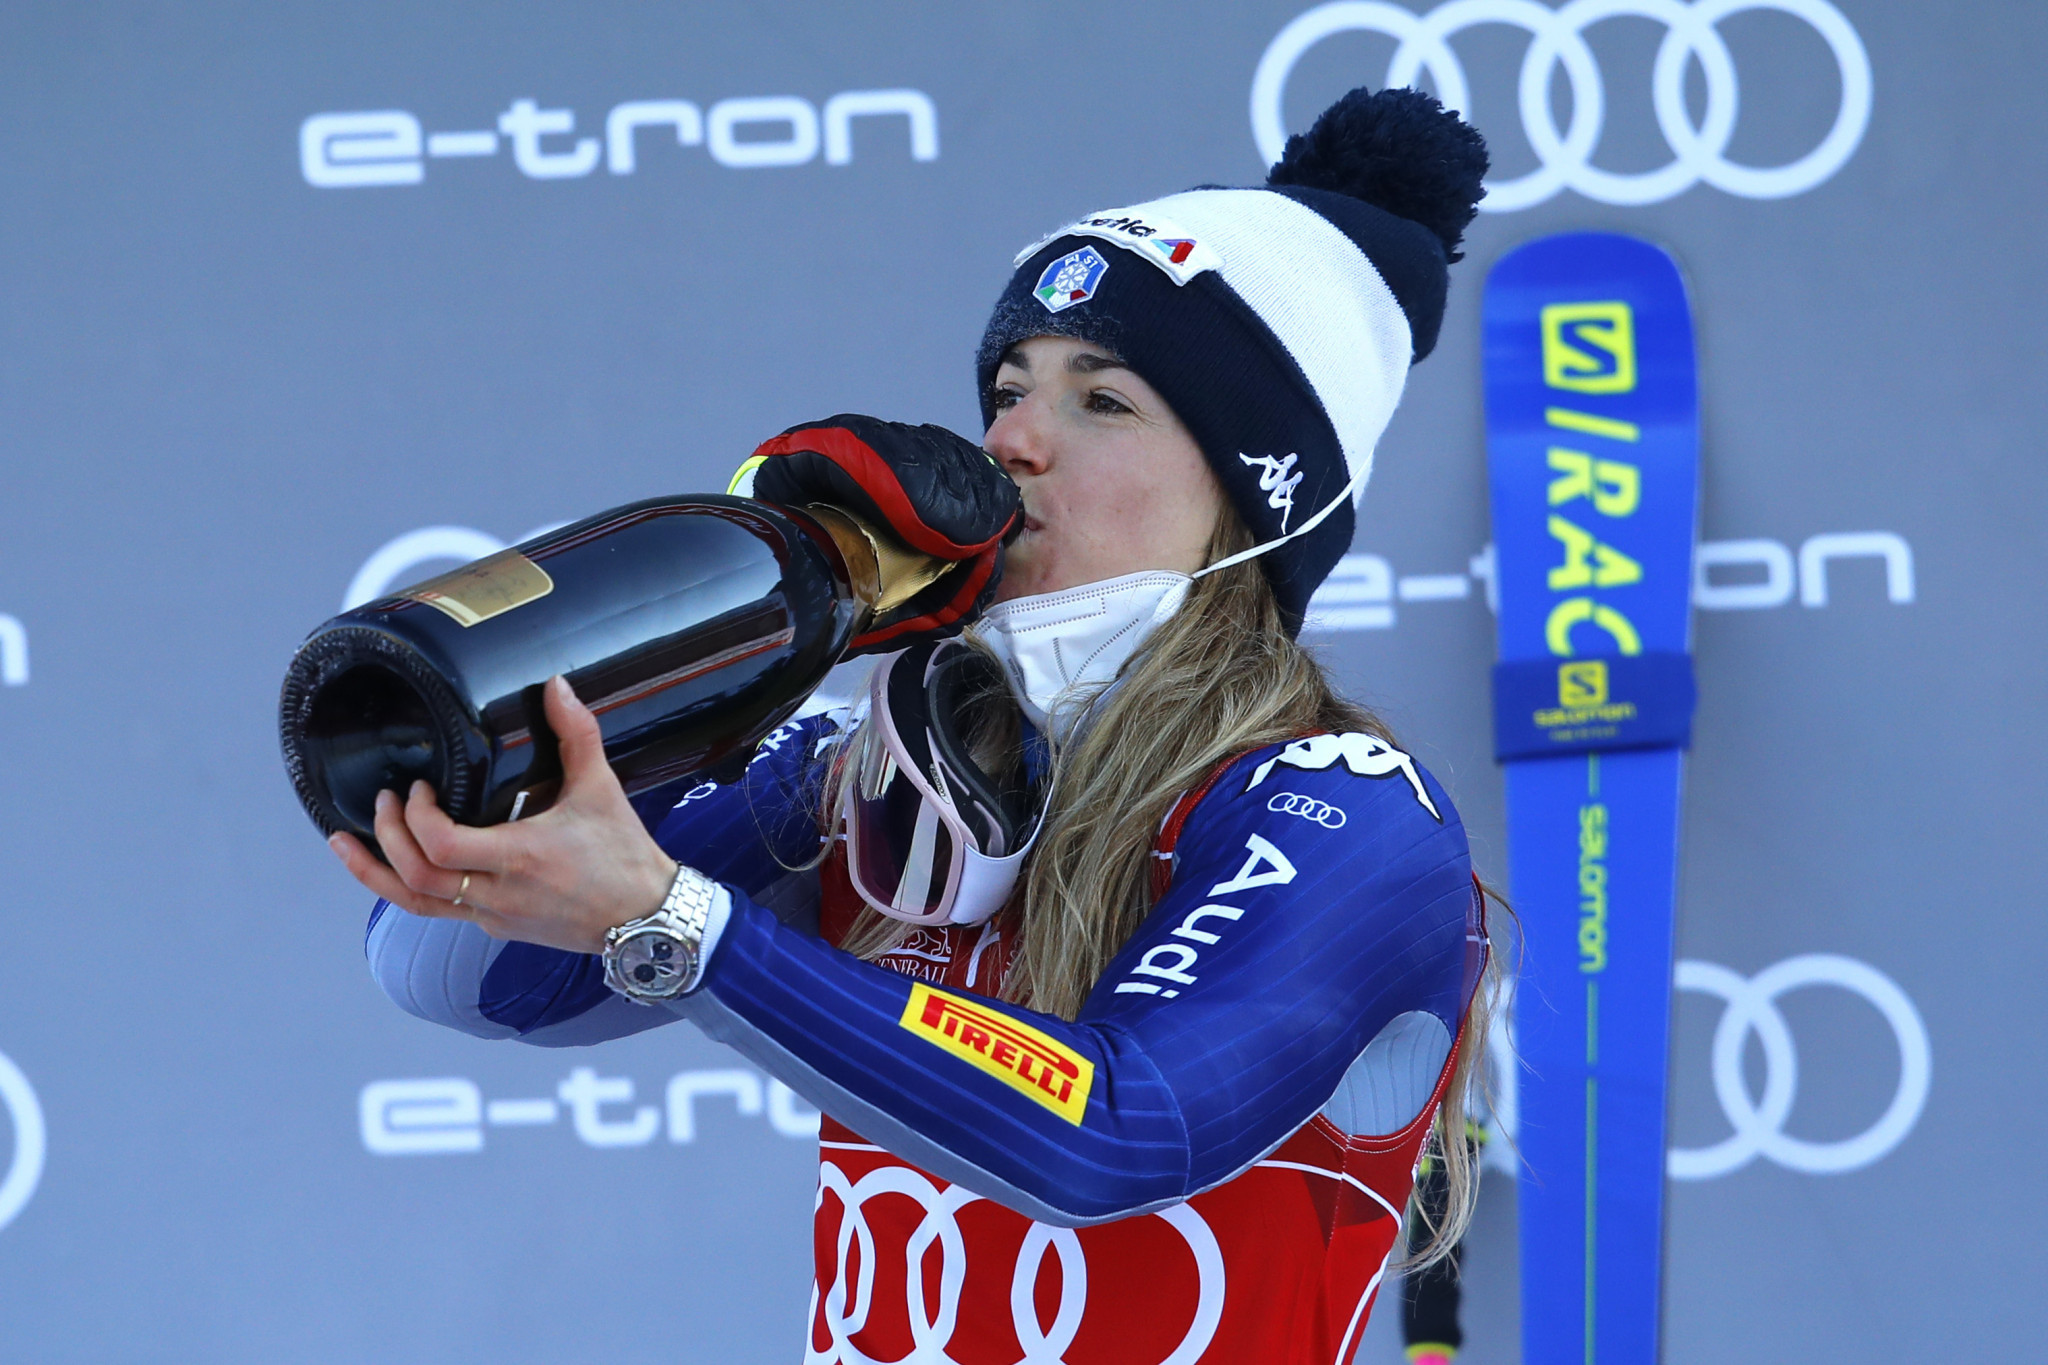 Marta Bassino has three giant slalom World Cup wins this season ©Getty Images